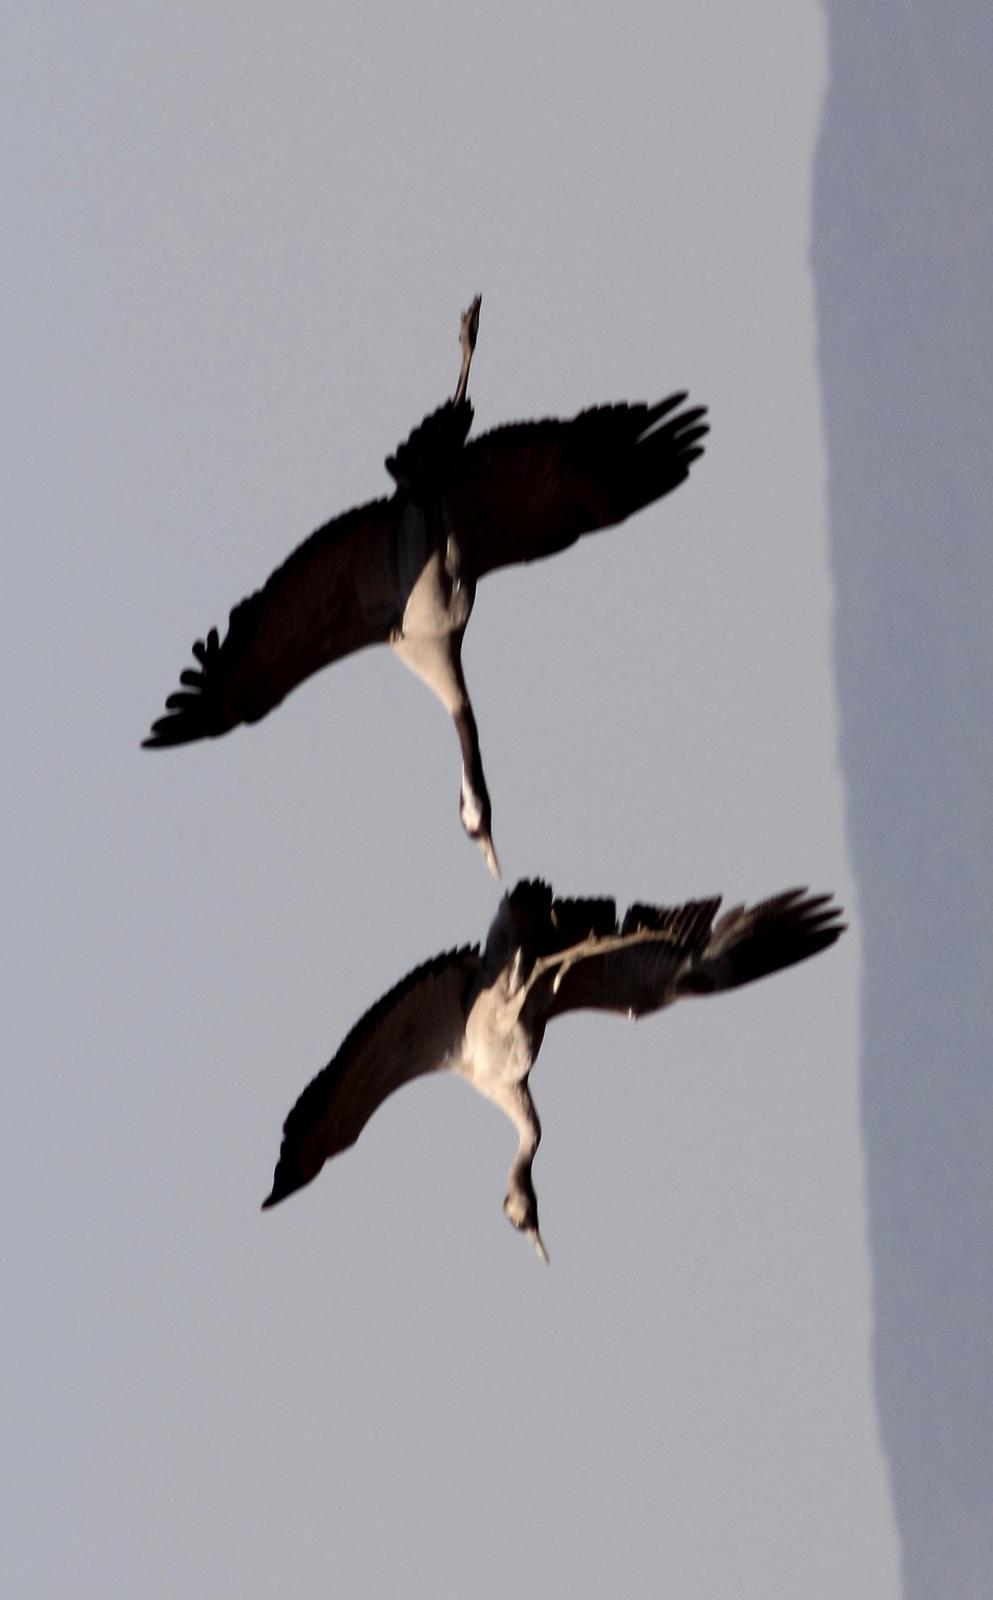 Common Crane Photo by Lee Harding